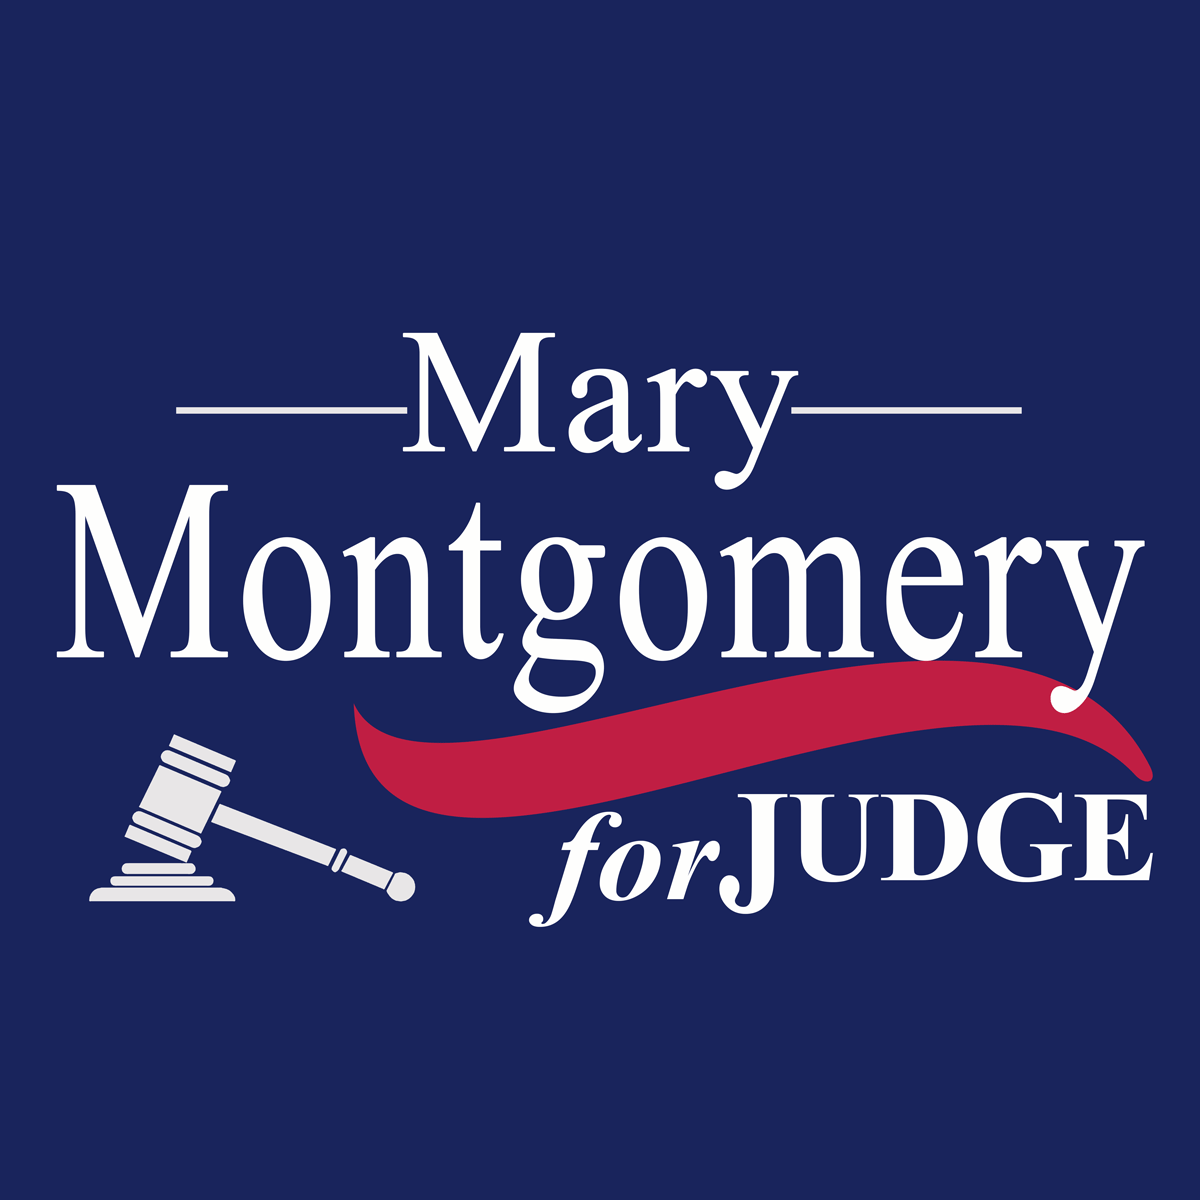 Montgomery Square Logo - $50 Donation | Mary Montgomery for Judge